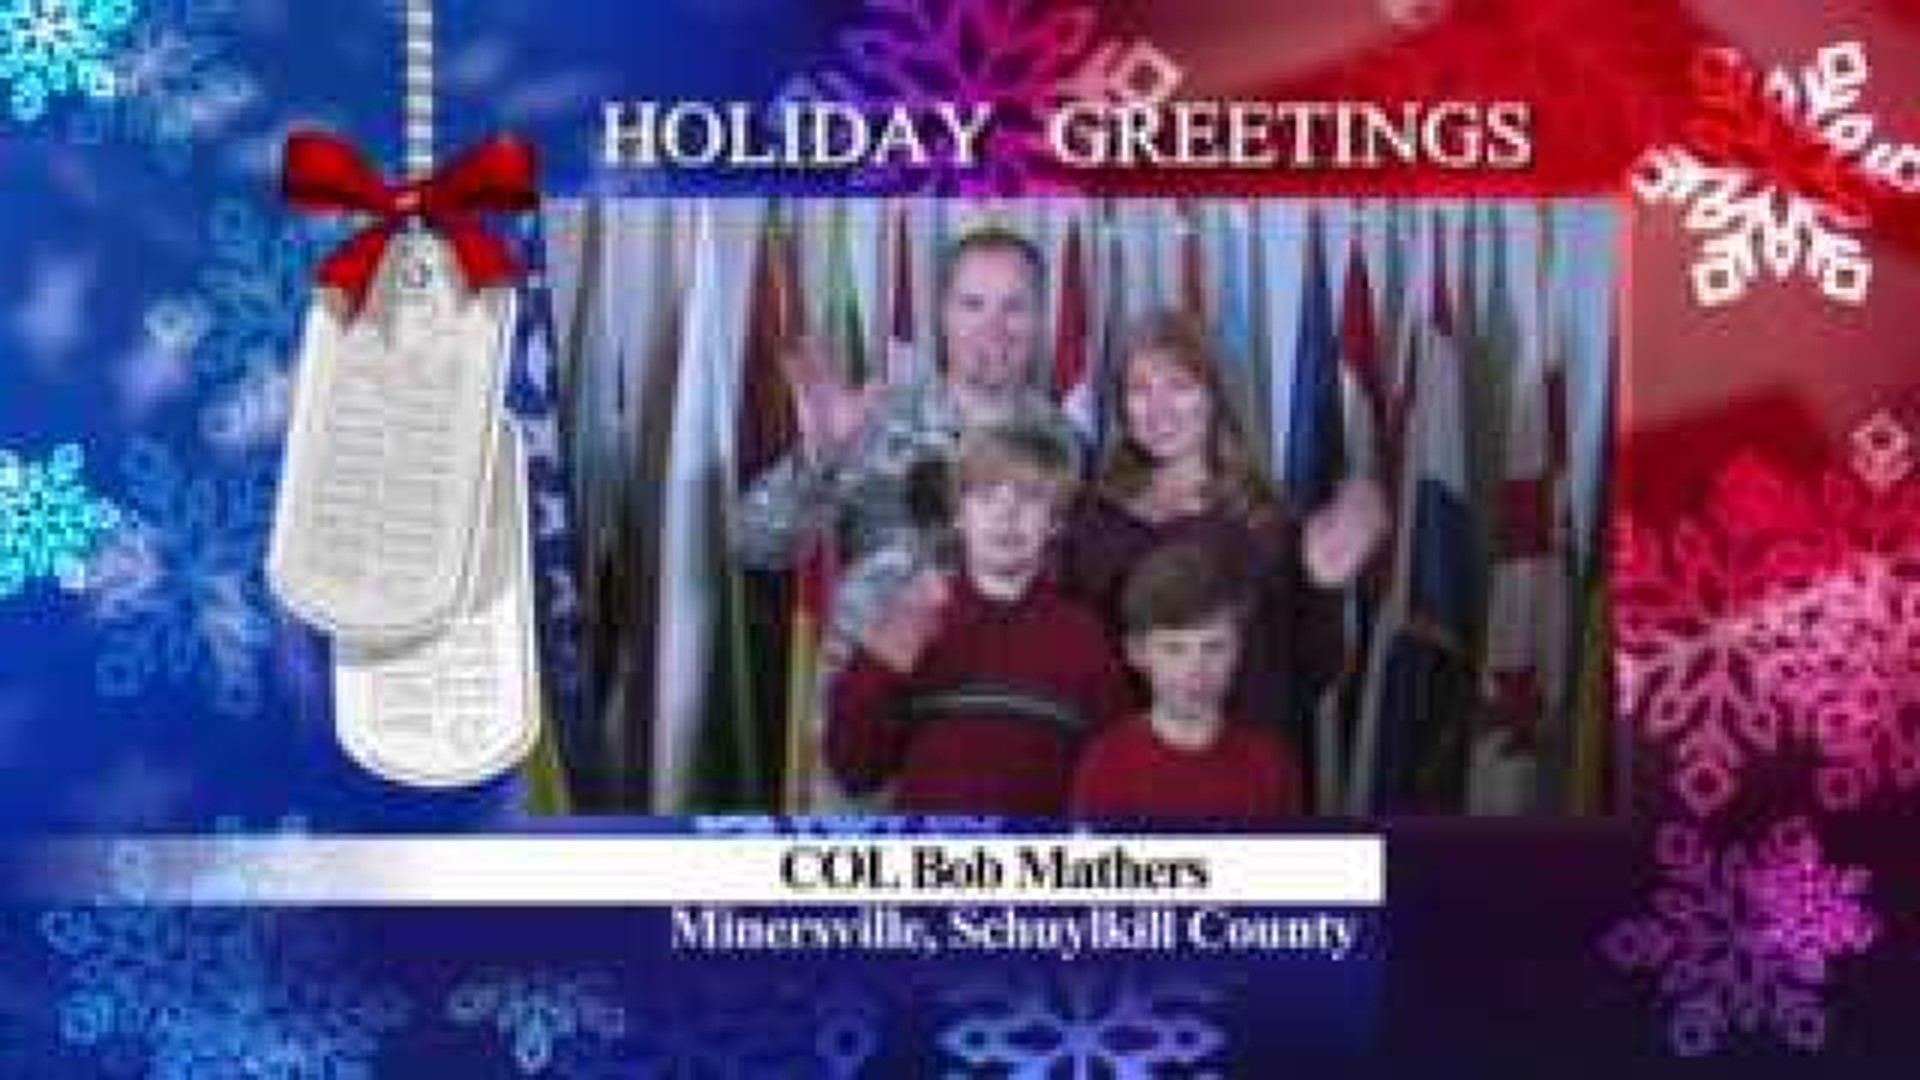 Military Greeting: COL Bob Mathers